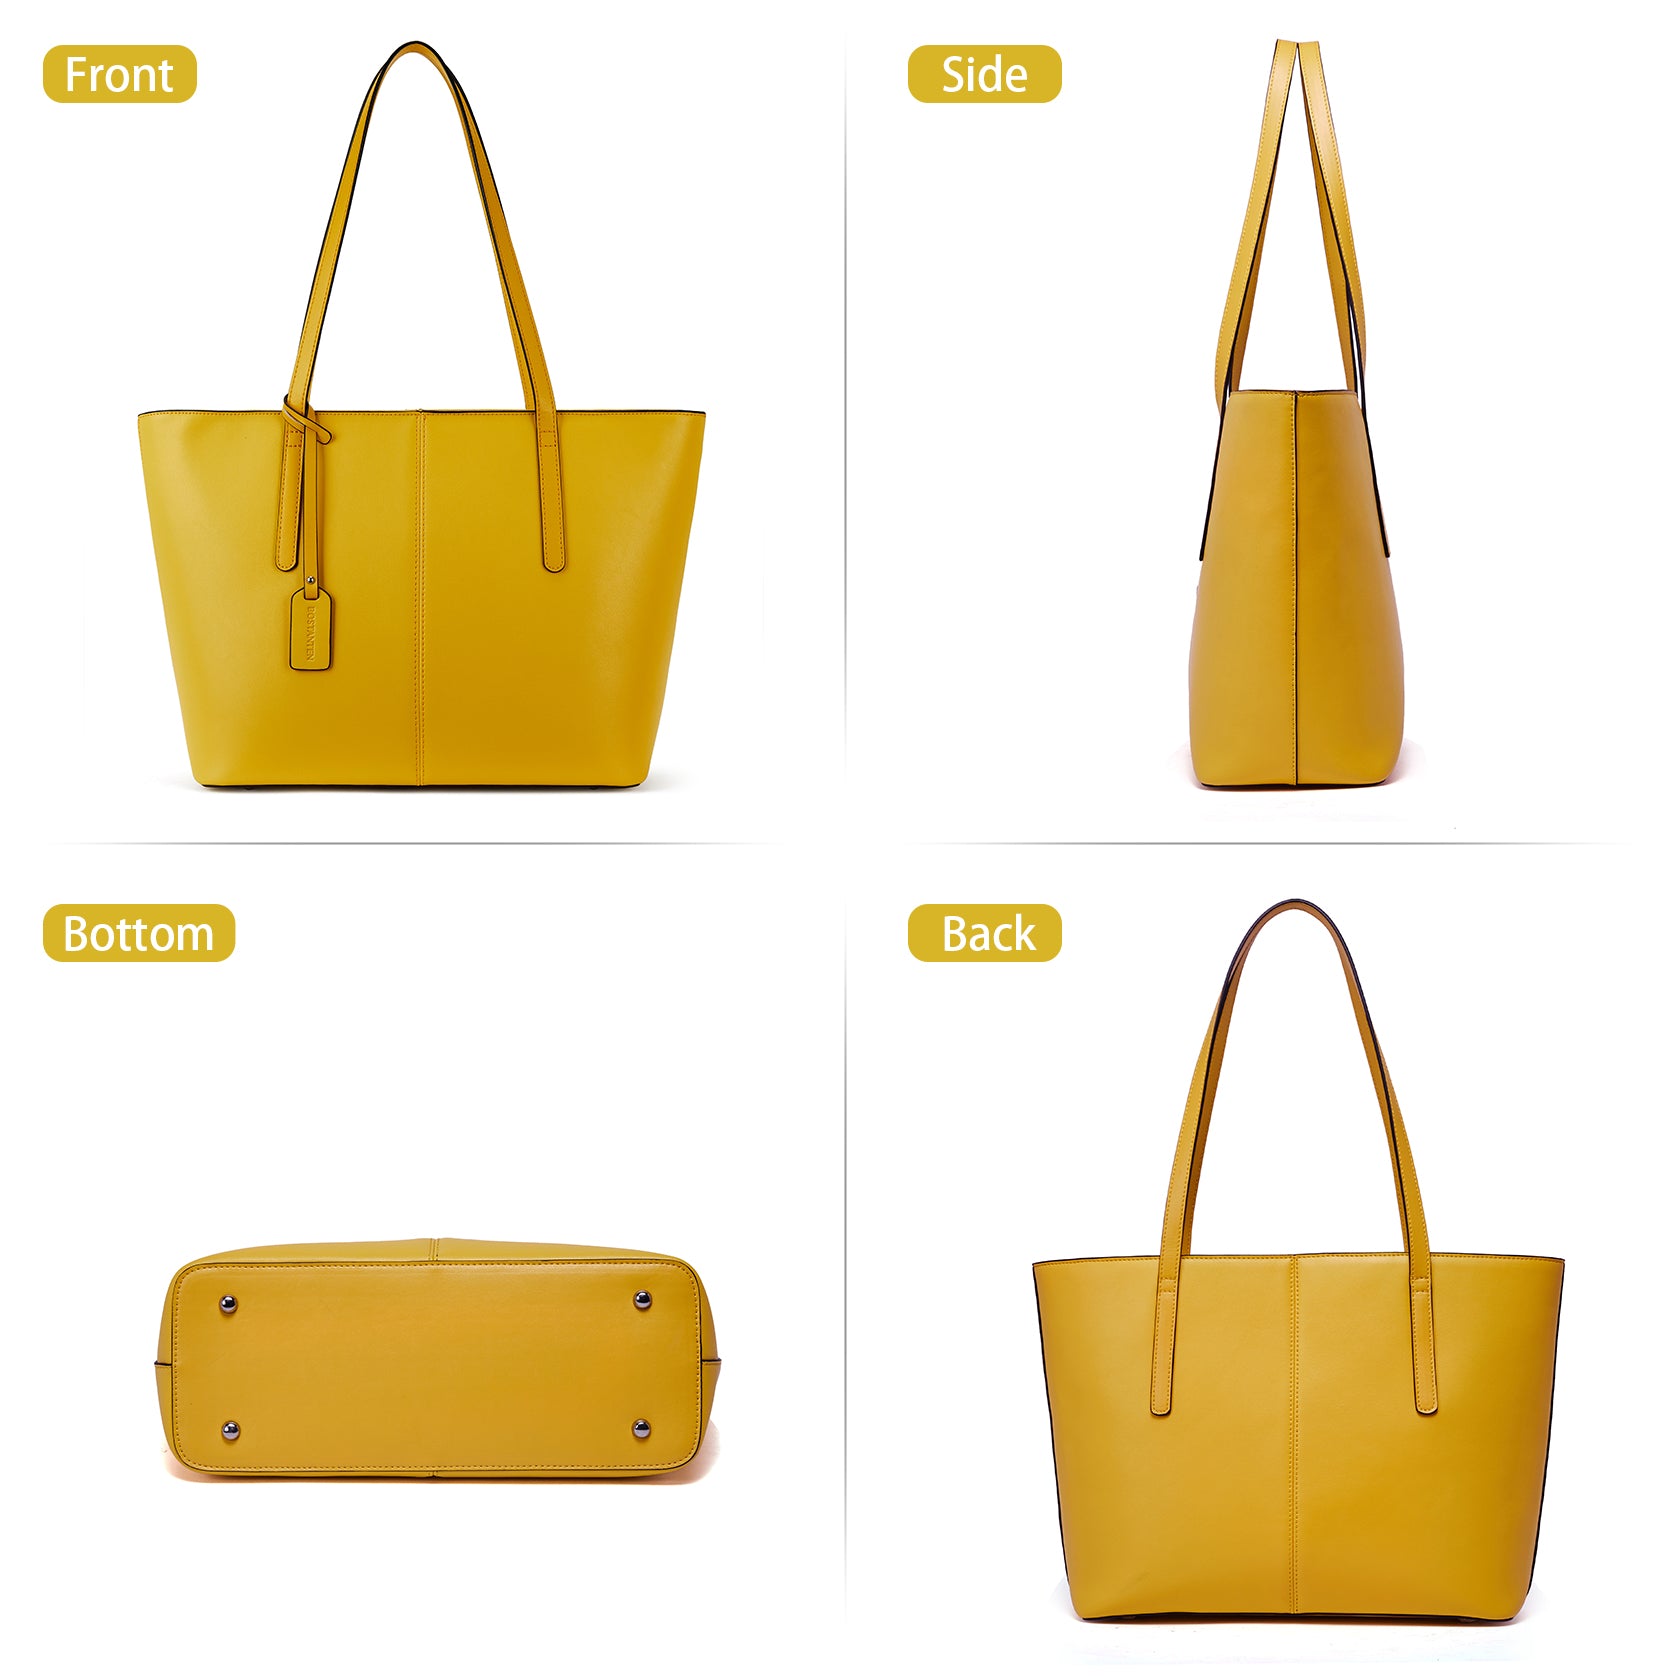 kate spade | Bags | Kate Spade Neon Yellow Purse | Poshmark